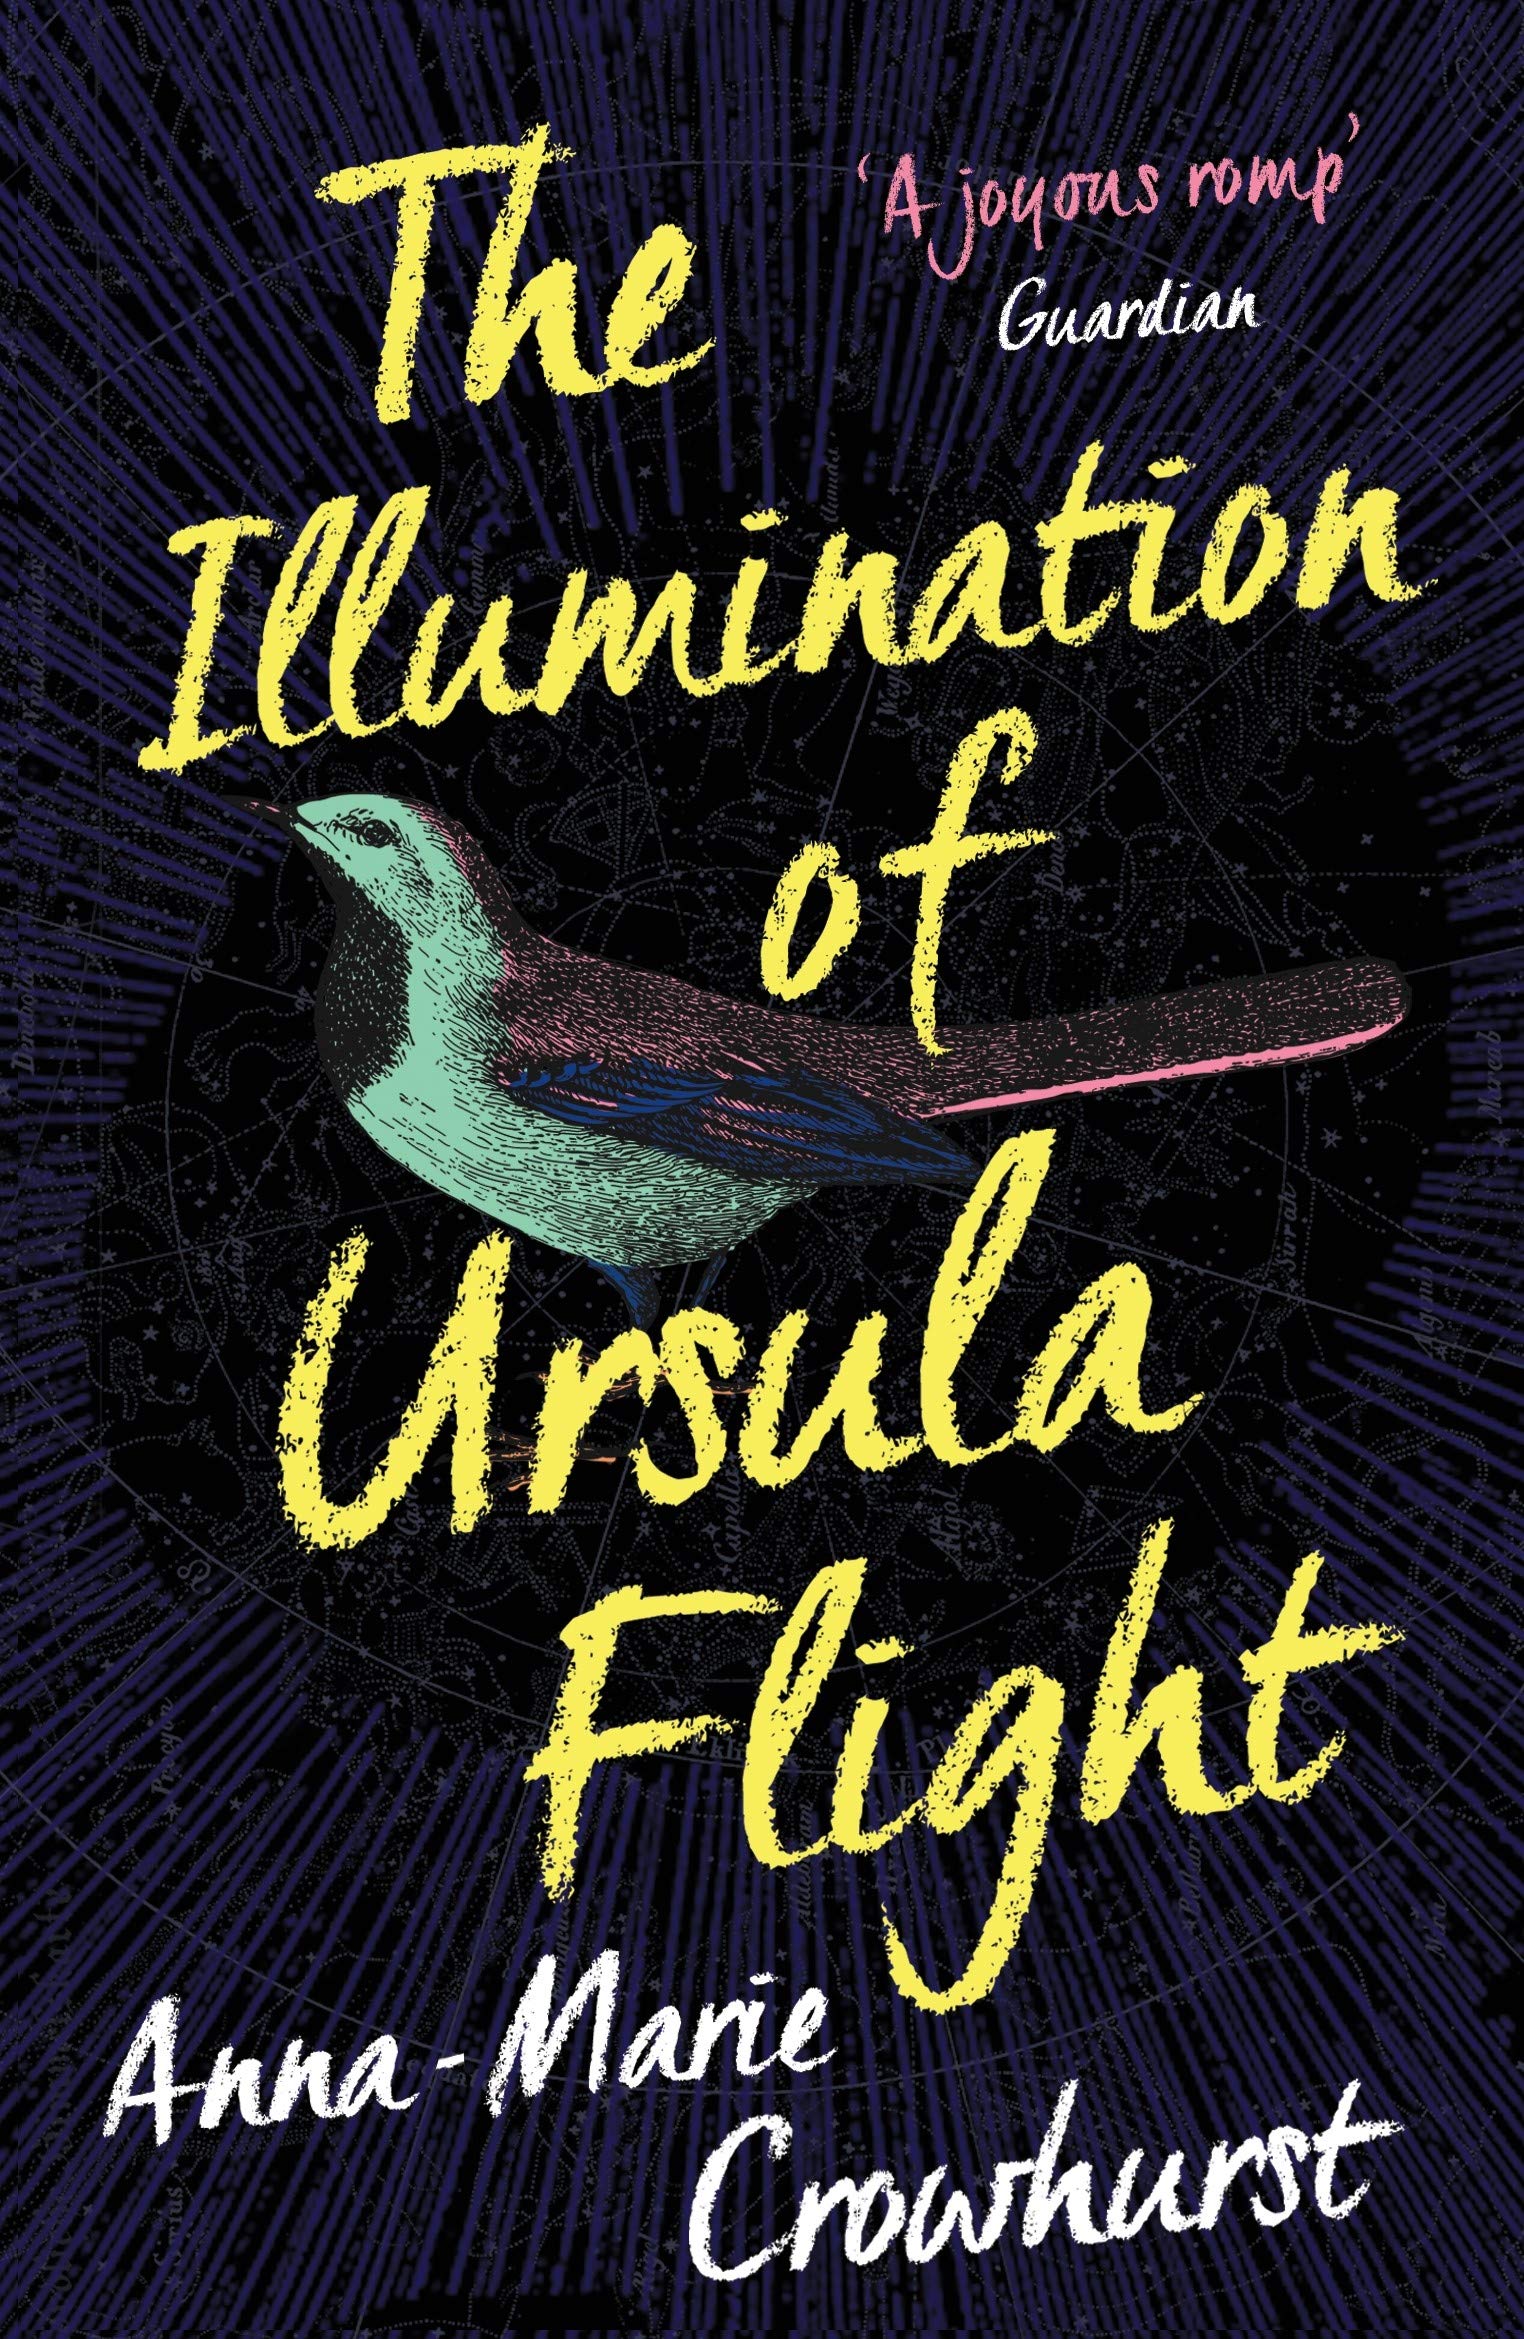 THE ILLUMINATION OF URSULA FLIGHT